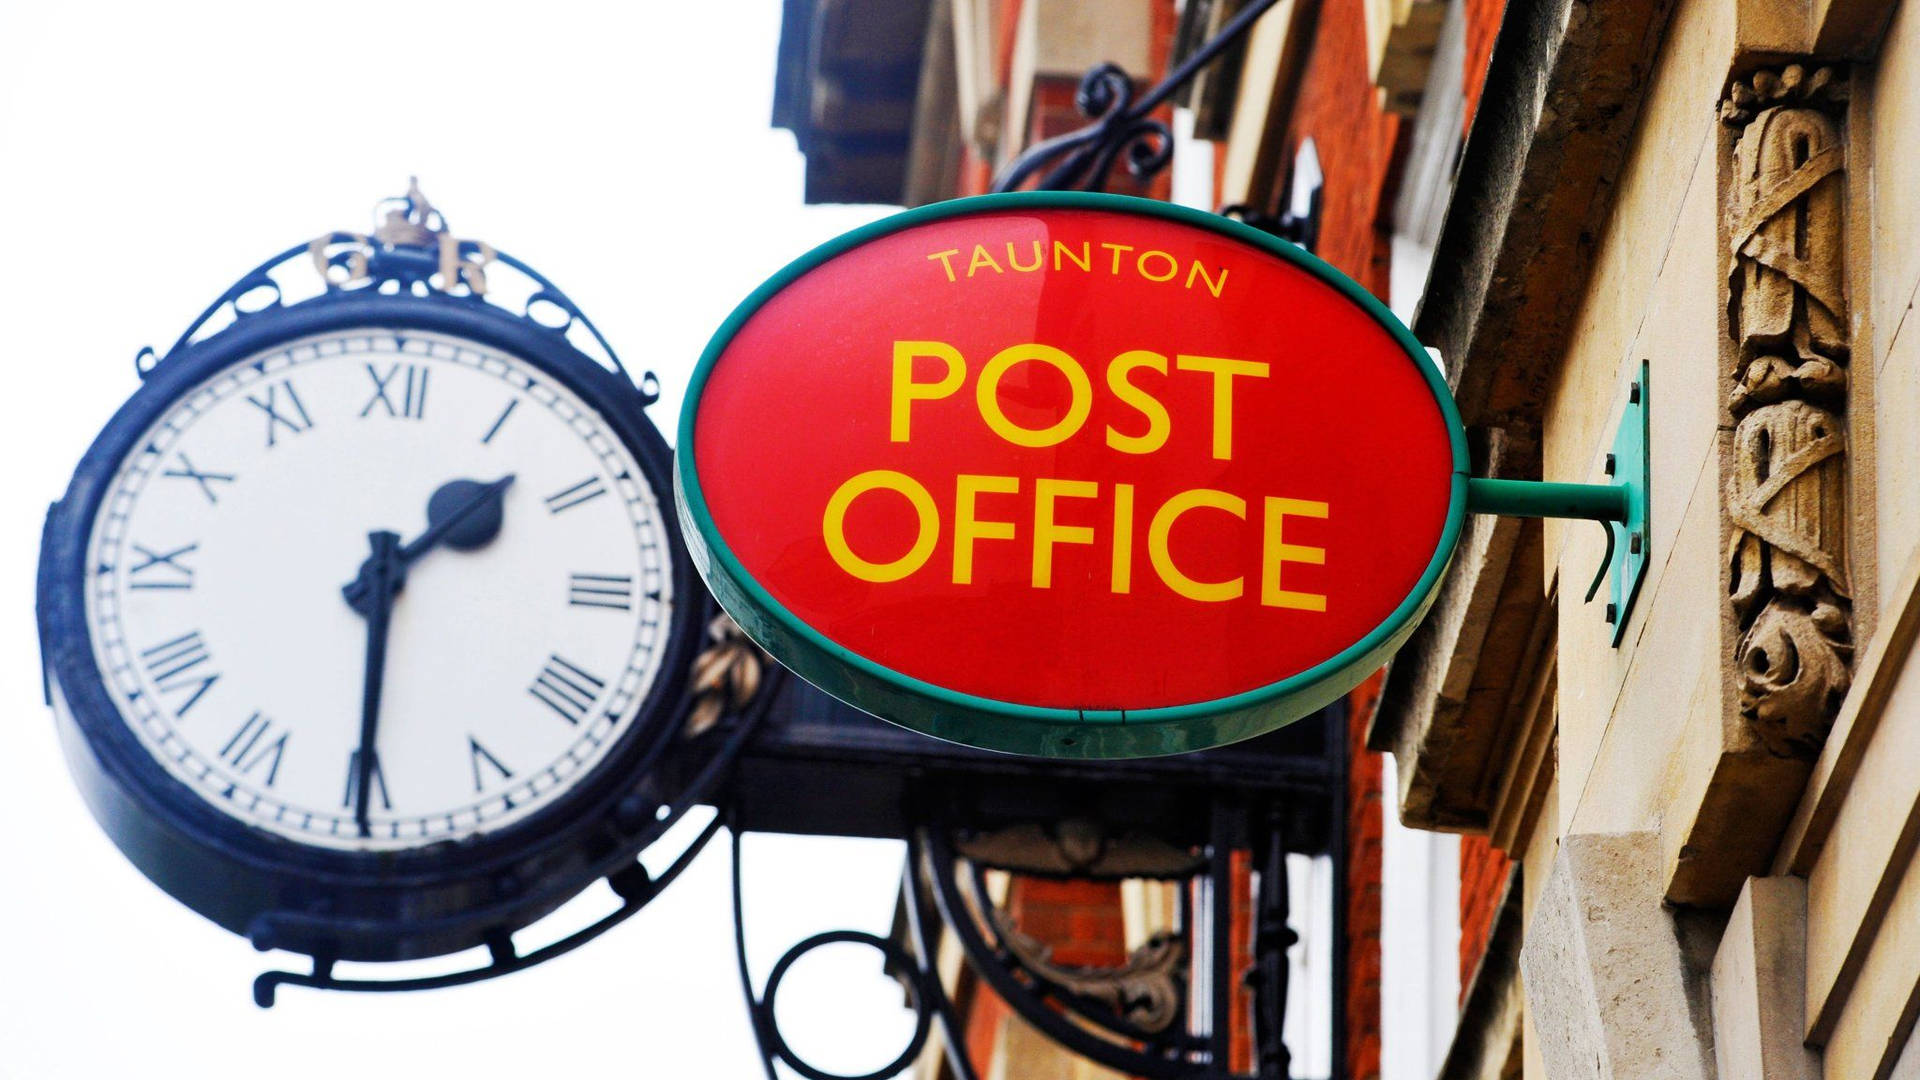 Taunton Uk Post Office Sign Background